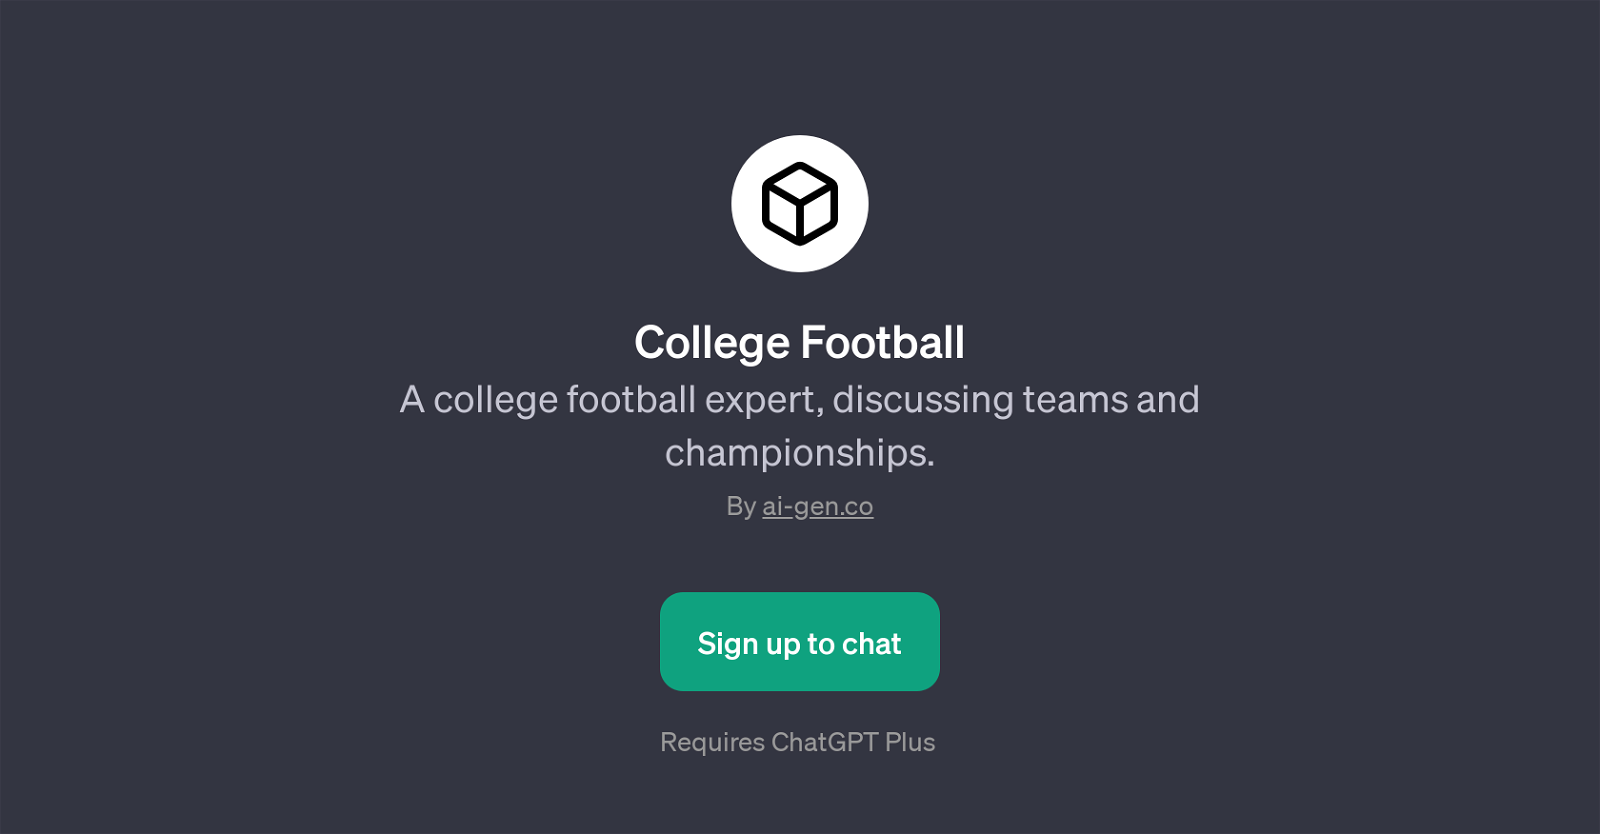 College Football website